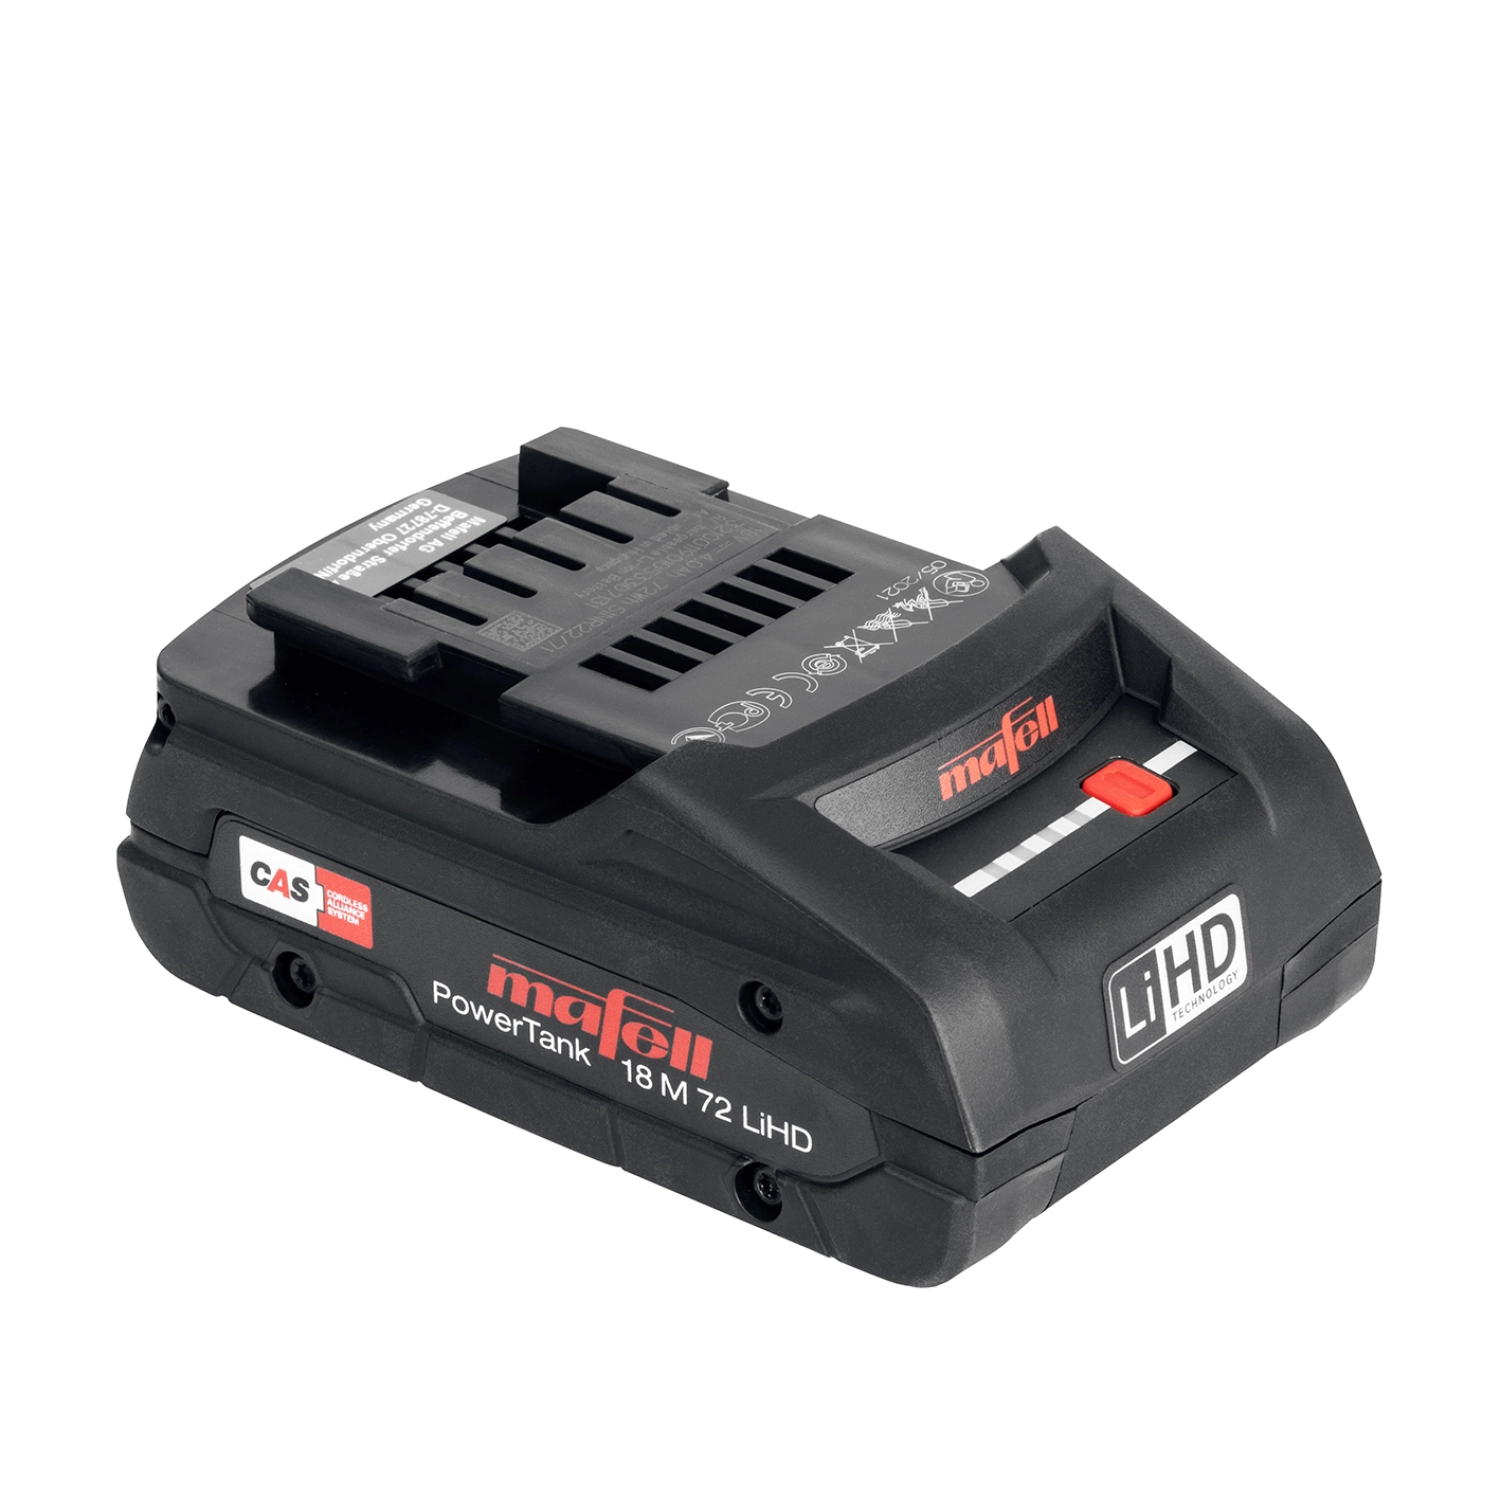 Mafell 18V LiHD Batterie PowerTank 18 M 72 - 4.0 Ah